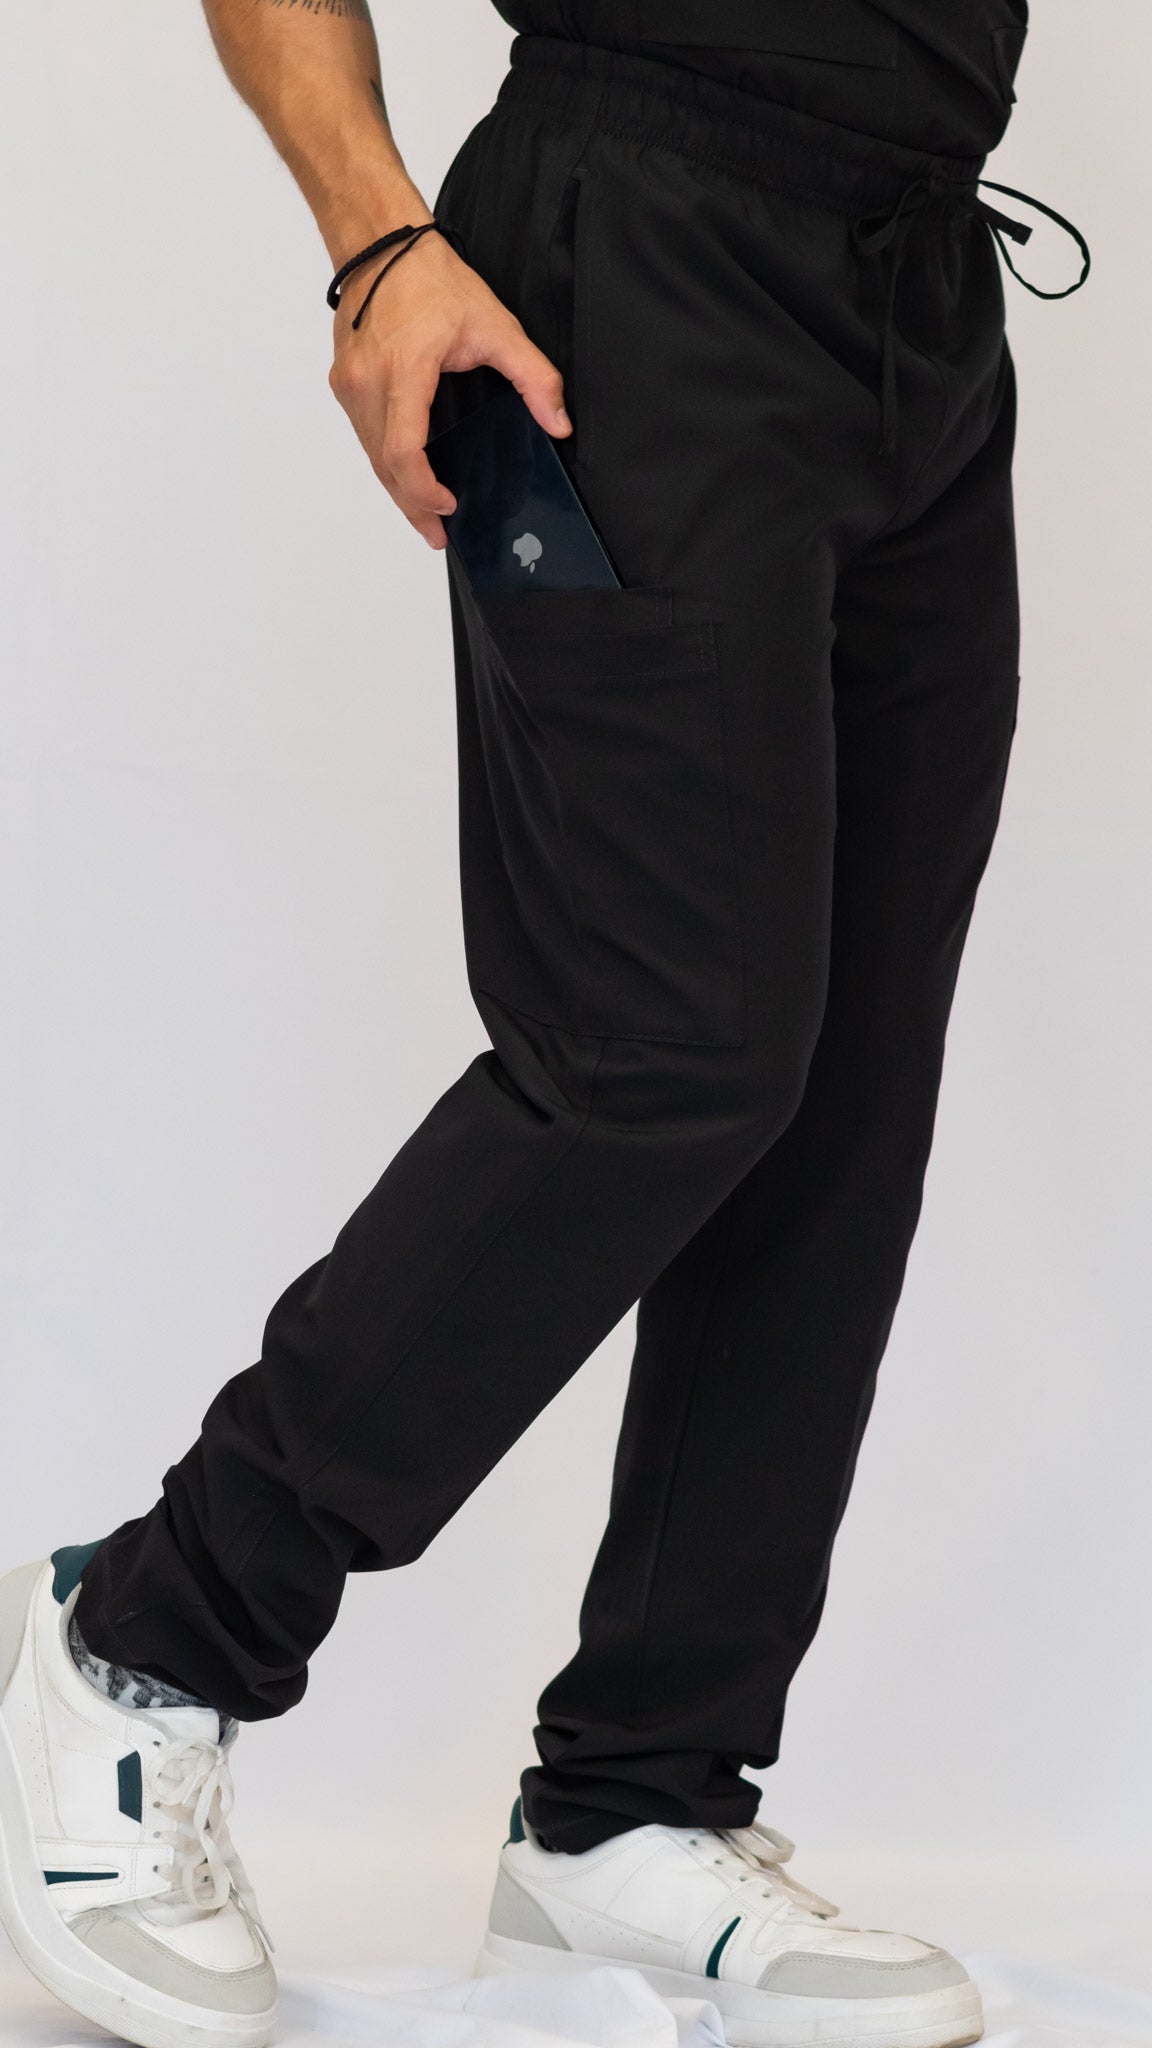 Pantalon  Quirurgico Negro Hombre FW Antifluido 5 bolsas.600